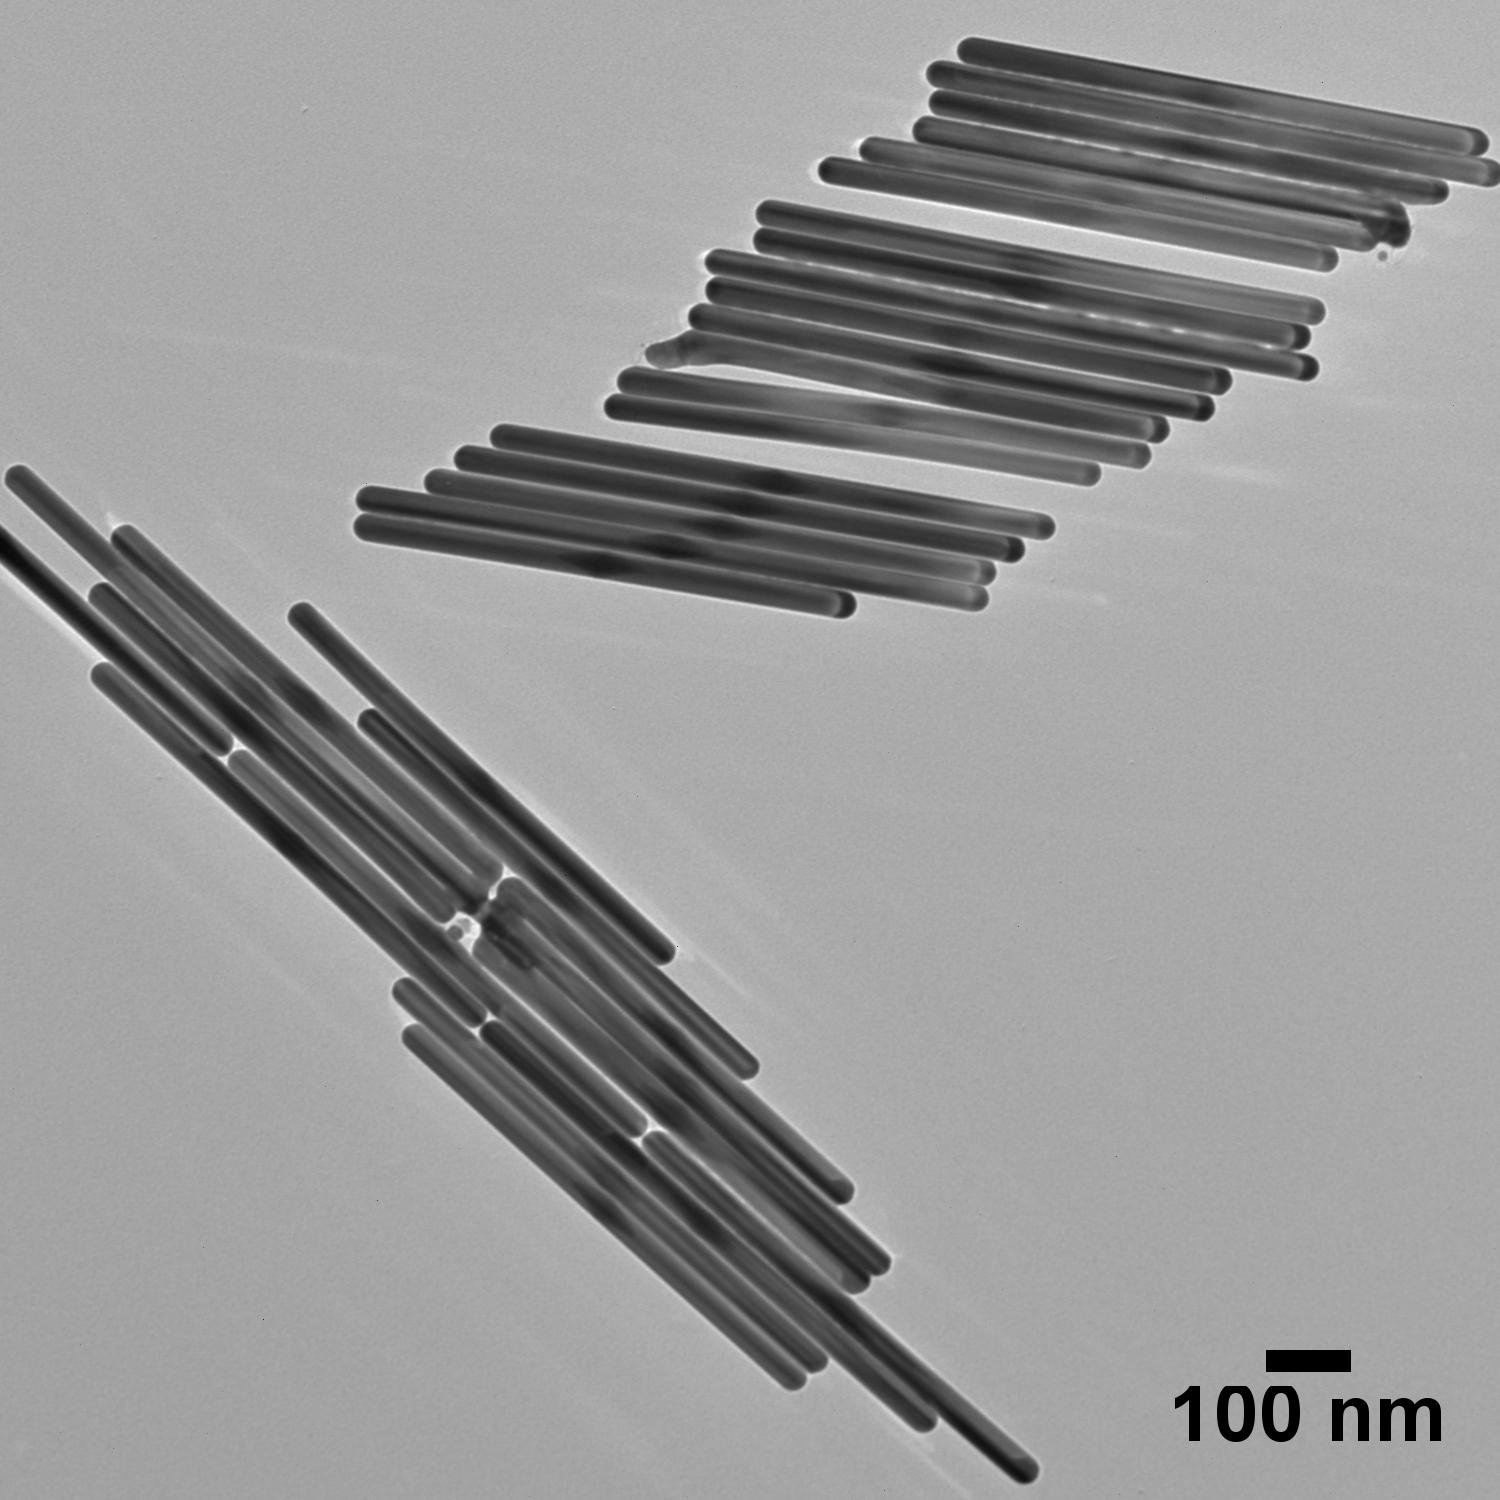 600 nm silver nanorods